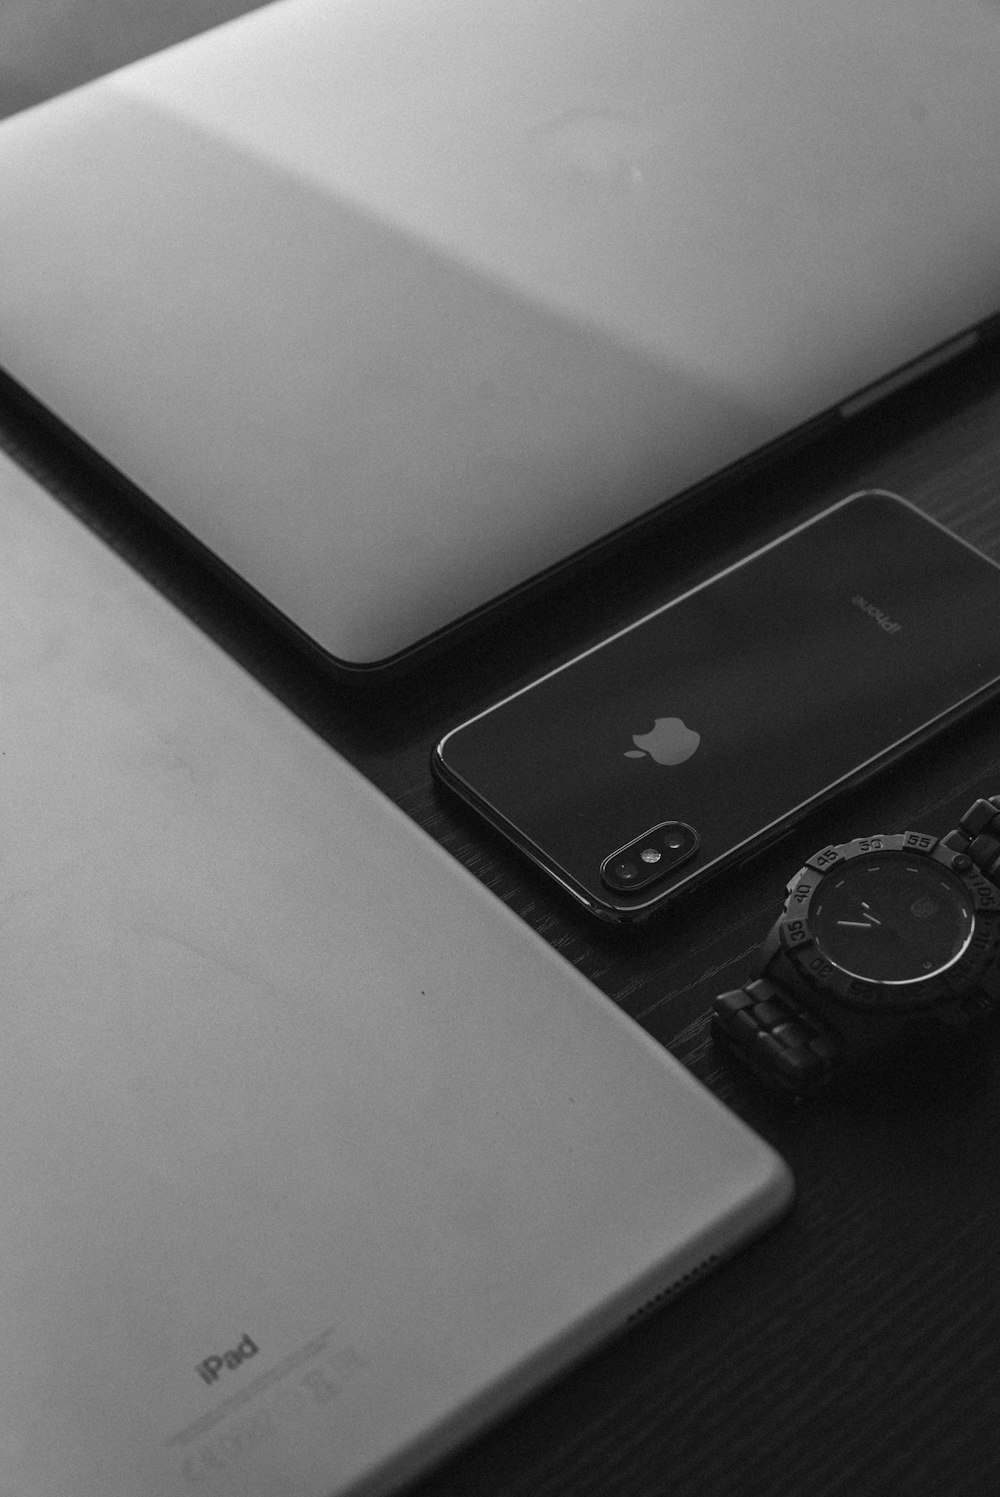 Apple MacBook prateado, iPad prateado, iPhone X cinza espacial e relógio analógico preto